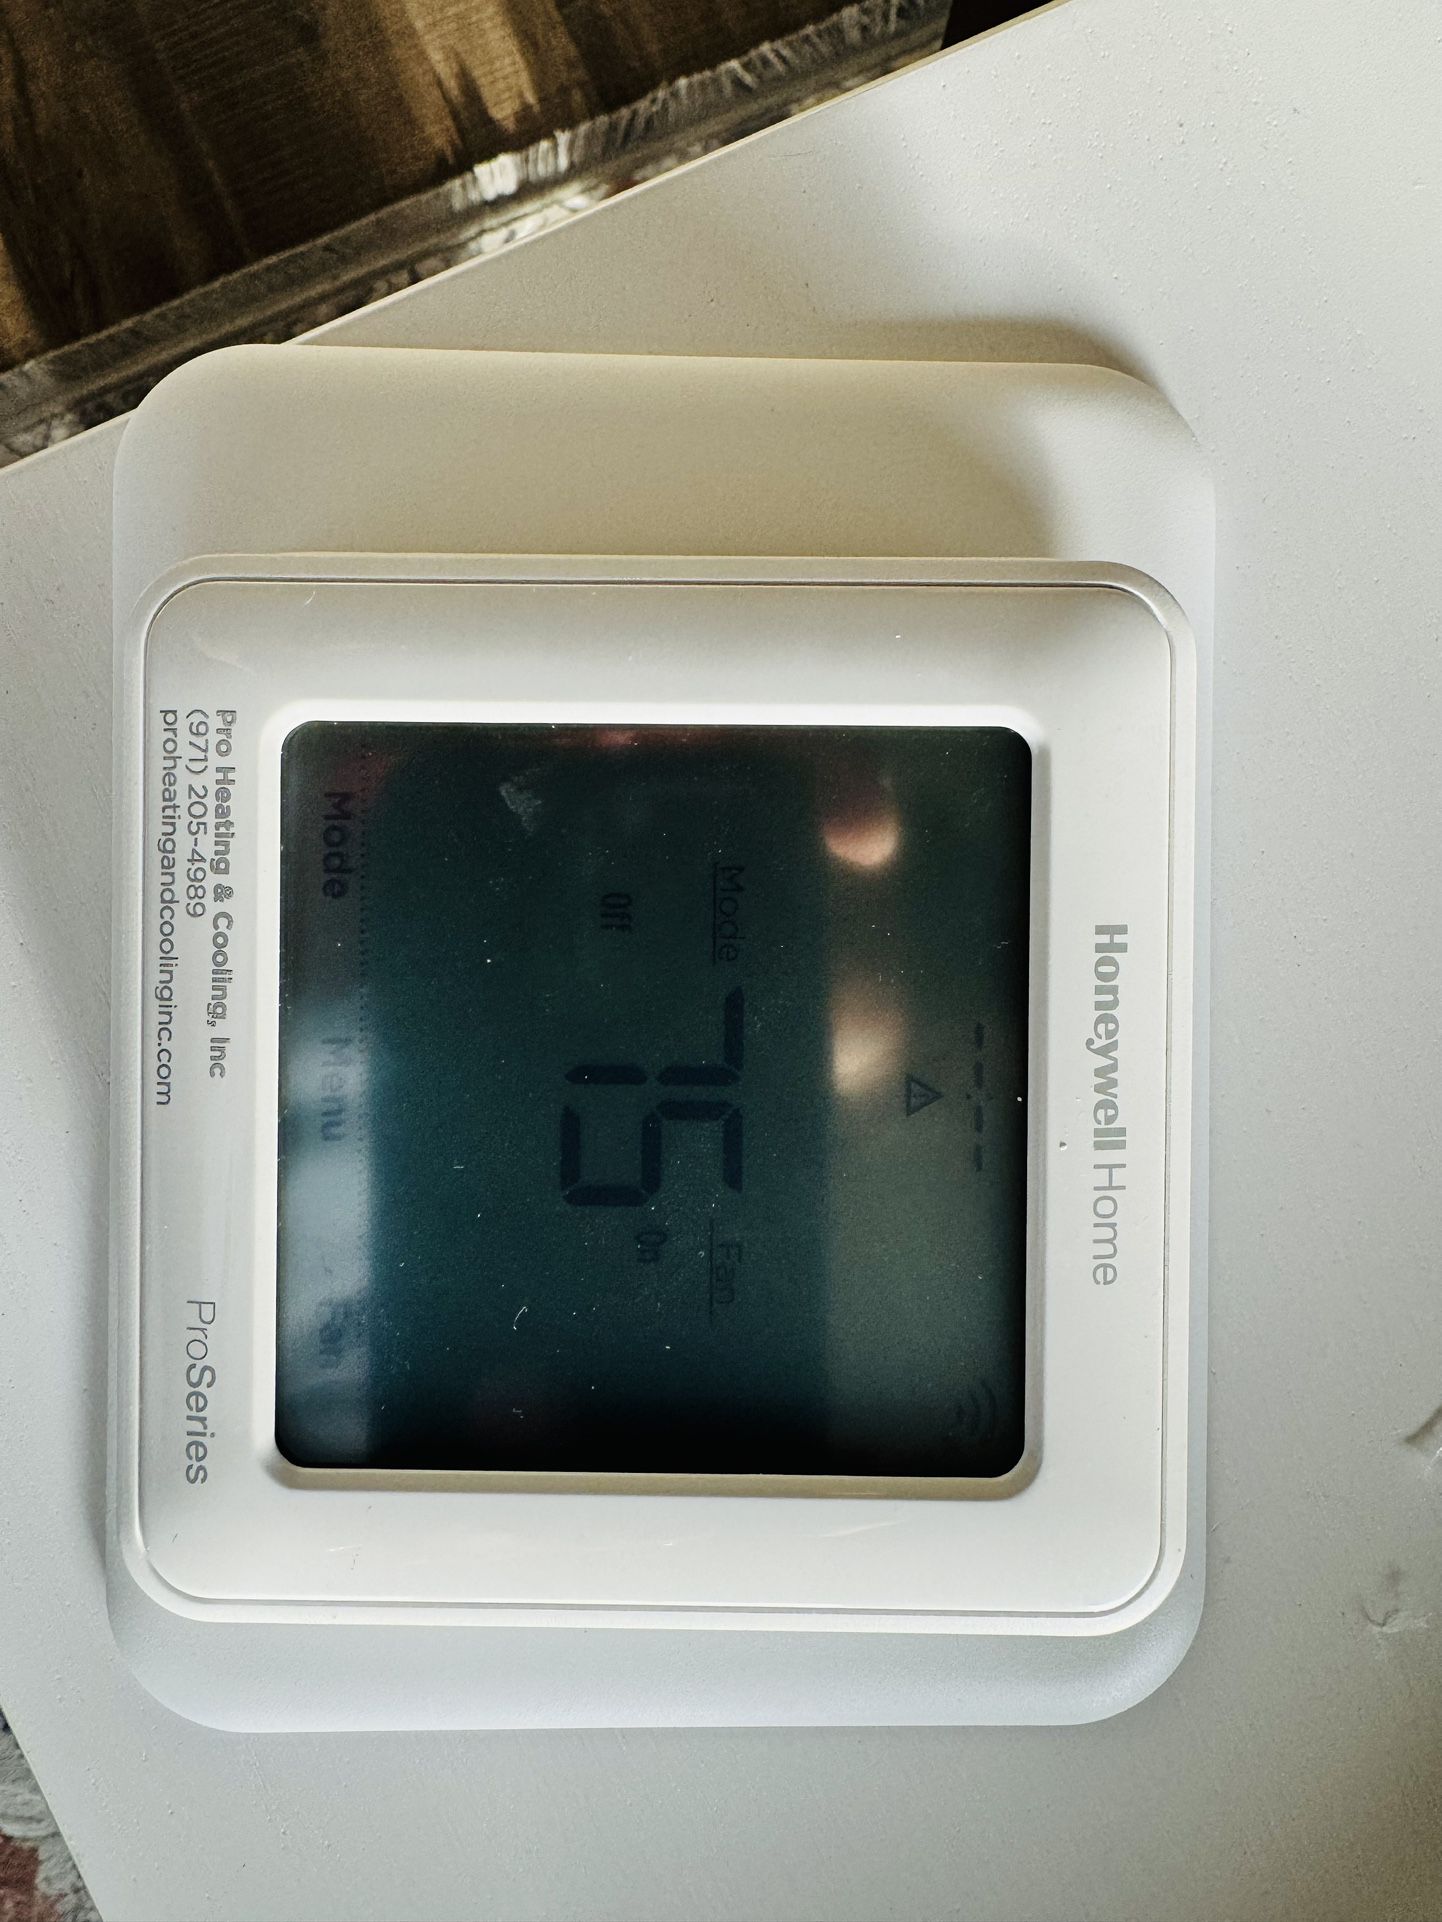 Honeywell Home Smart Thermostat